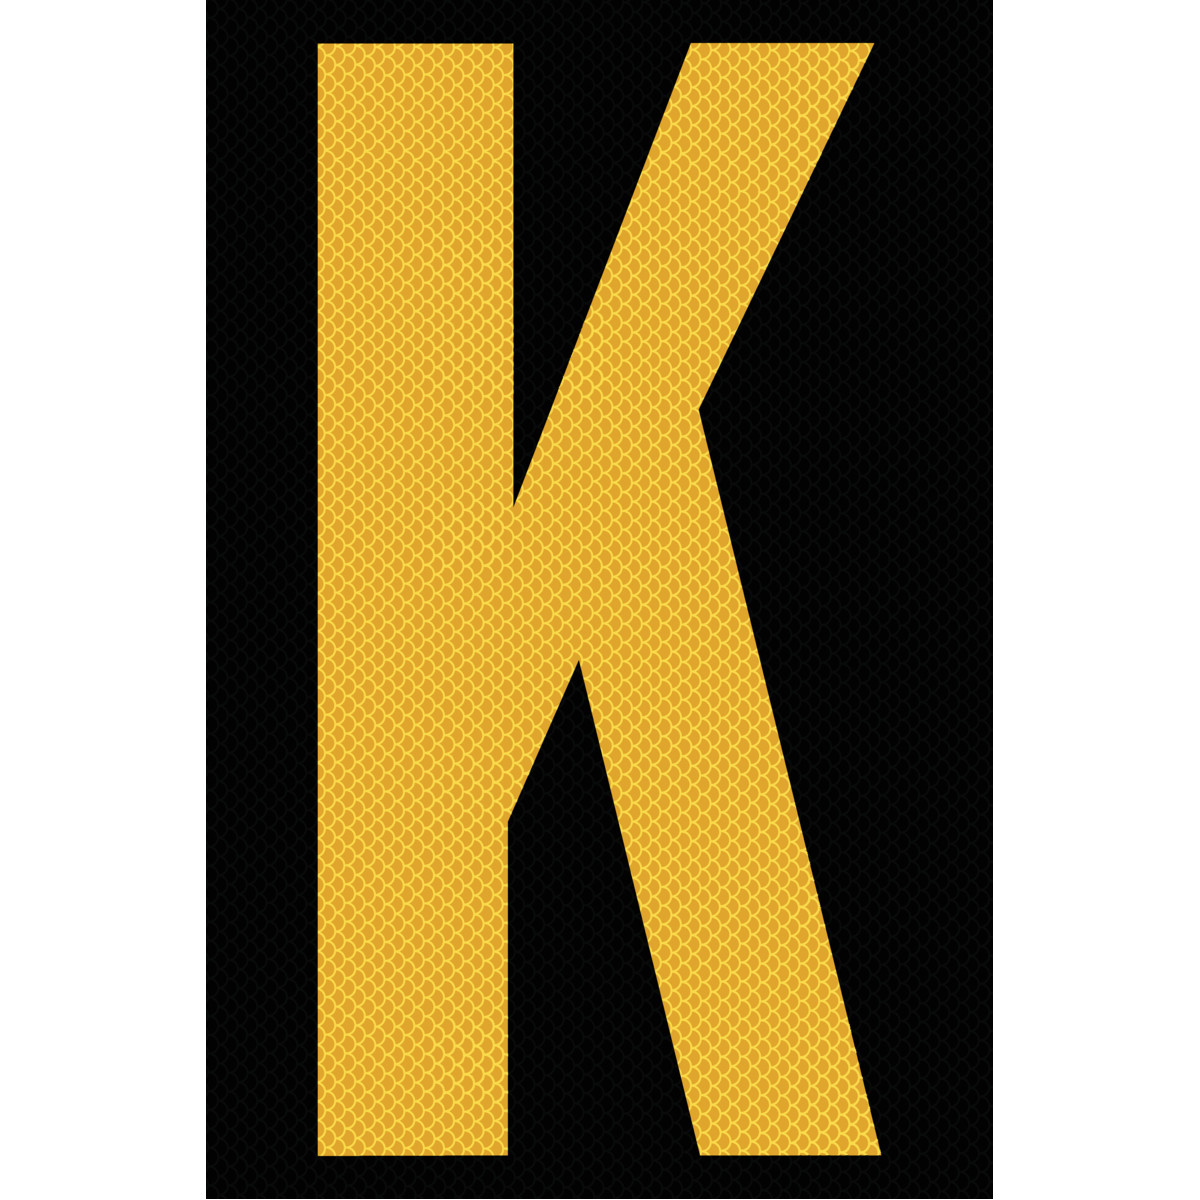 4" Yellow on Black High Intensity Reflective "K"